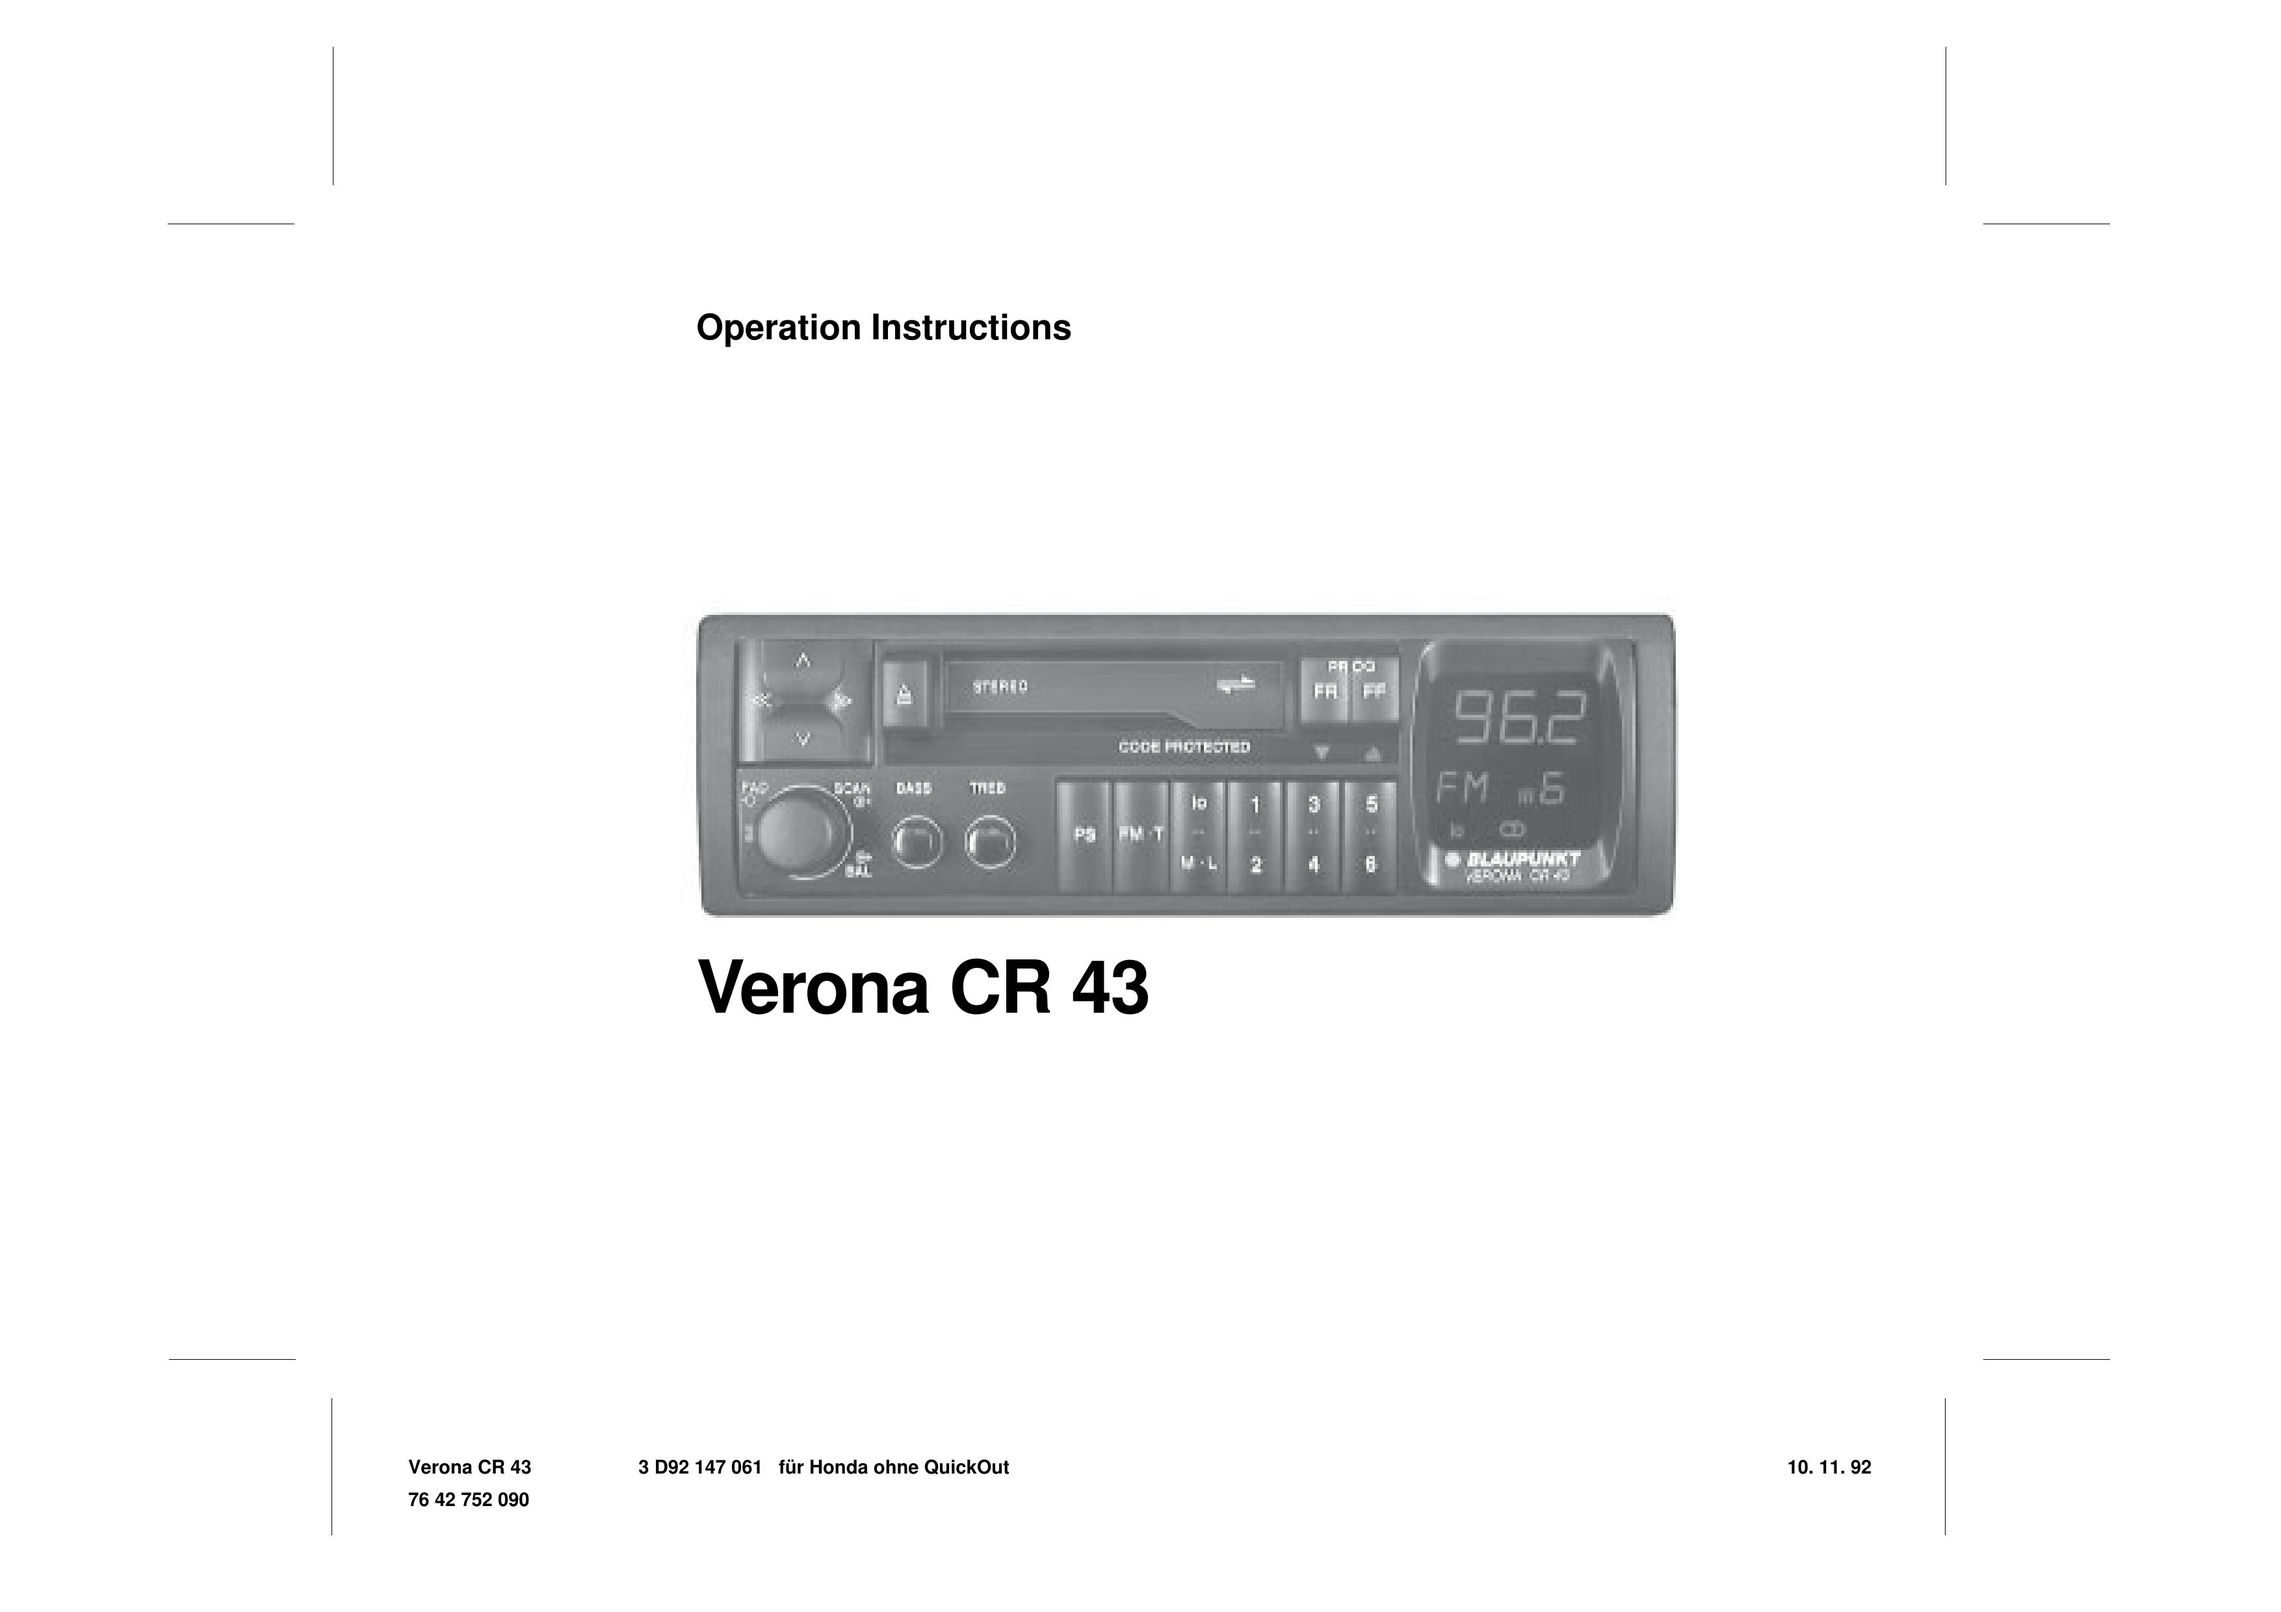 Verona CR 43 Car Stereo System User Manual